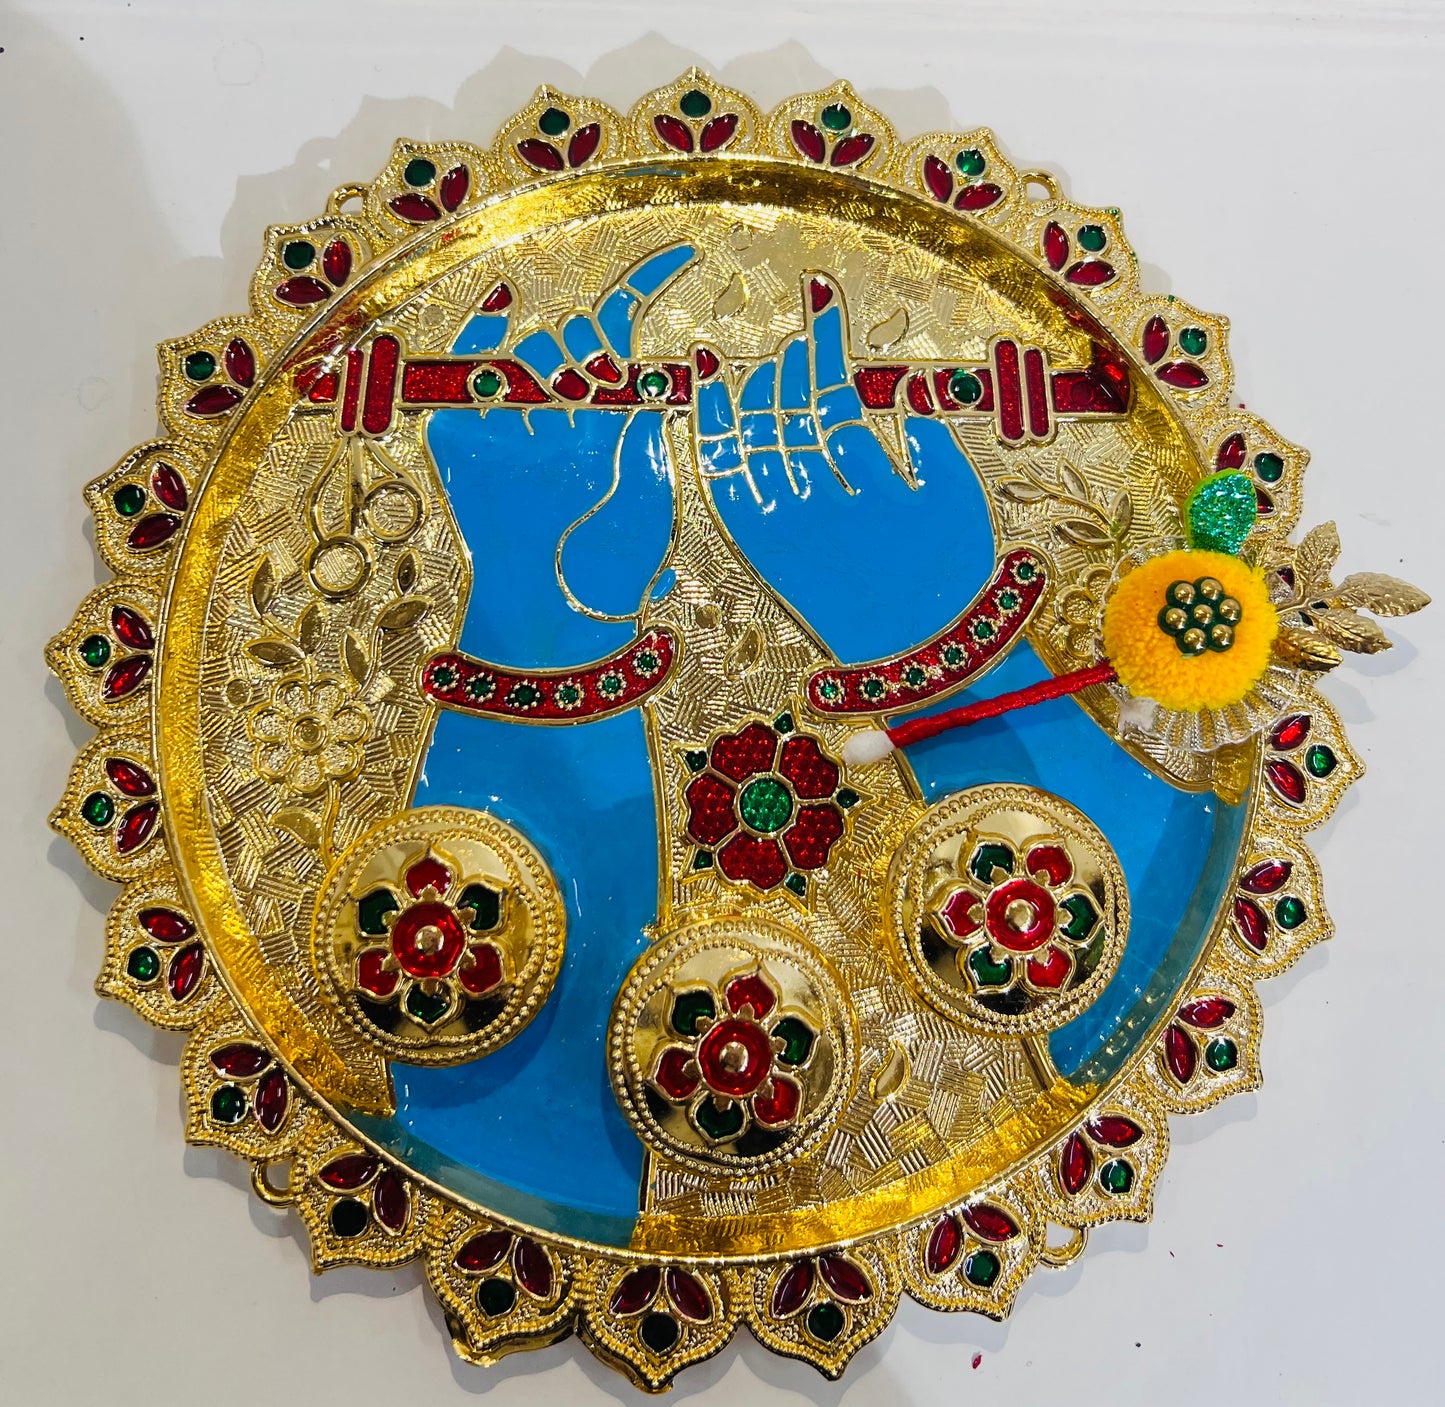 CHANDNI COLLECTION 1 Pc Plate Kankavati Roli Chawal/Rice Holder, Akshata Kumkum Haldi Holder Indian Festival Rakhi Pooja Thali Diwali Pujan Puja Mandir Tika Platter Housewarming Gifts Items